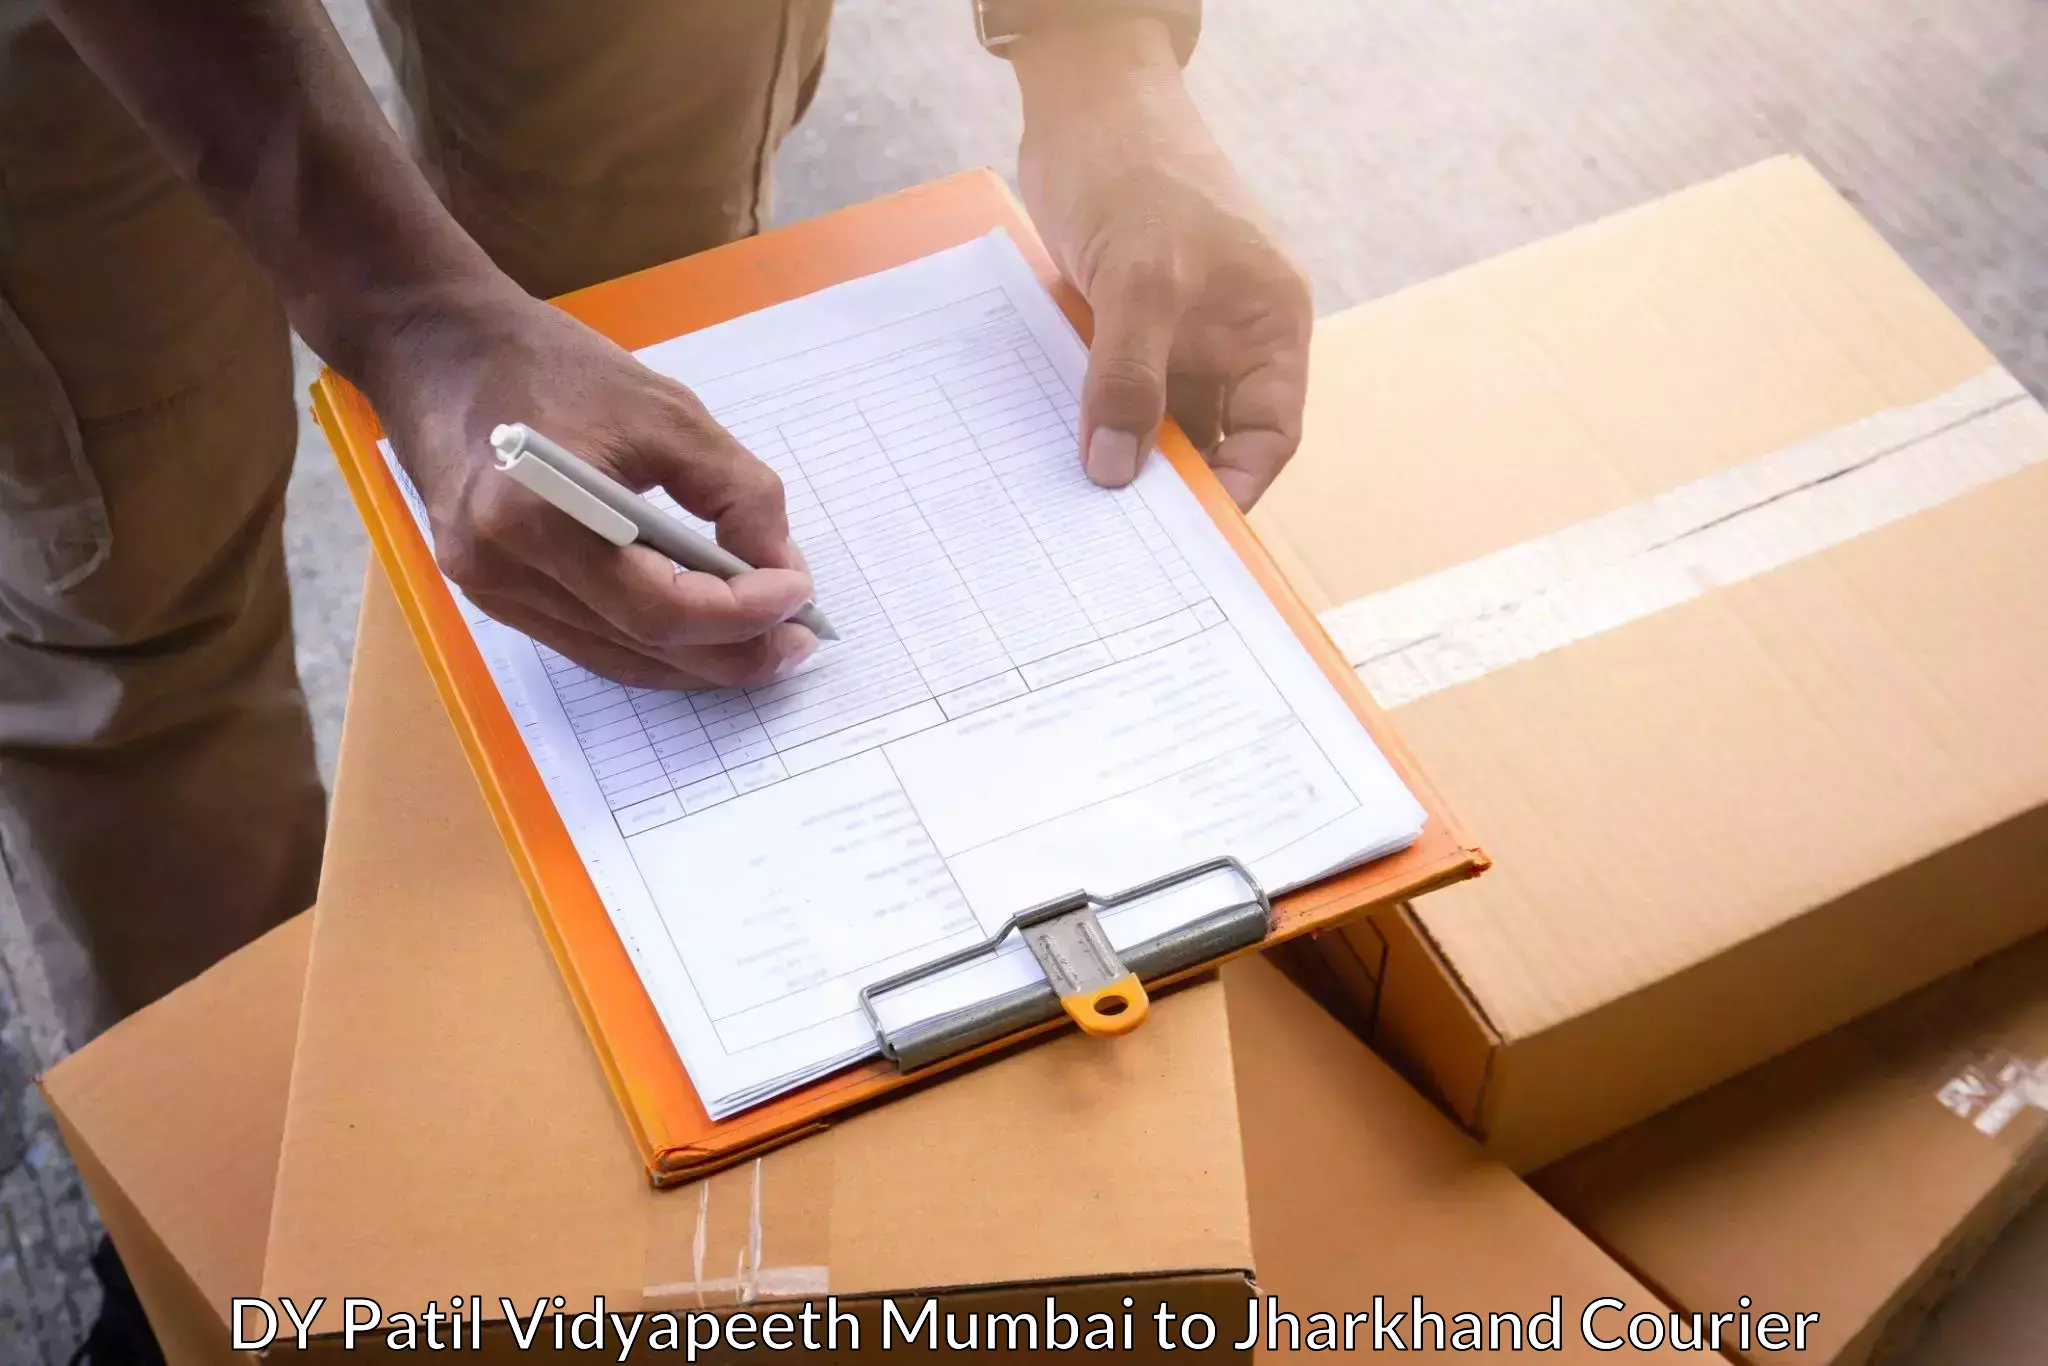 Expedited shipping methods DY Patil Vidyapeeth Mumbai to Jamshedpur